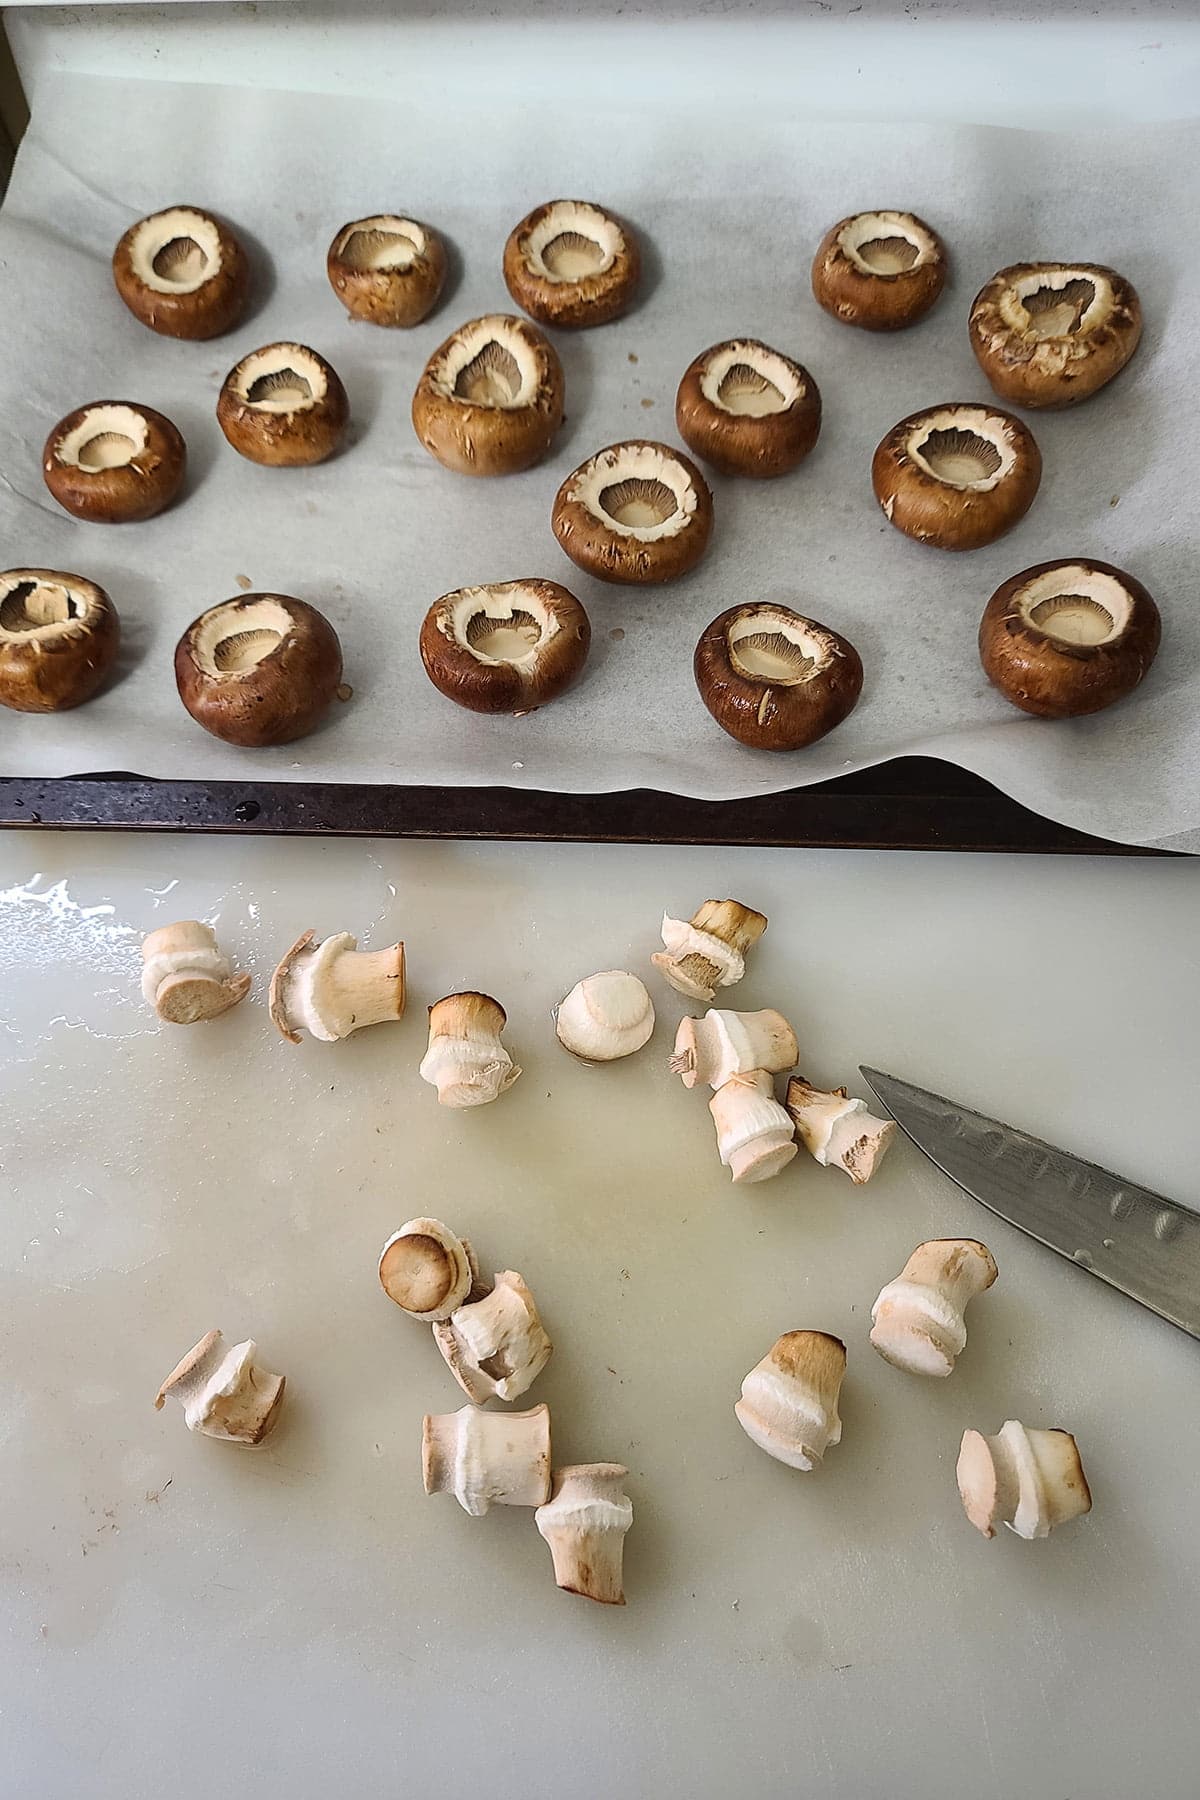 Mushroom caps arramged on a baking sheet, behind a cutting board with mushroom stems on it.